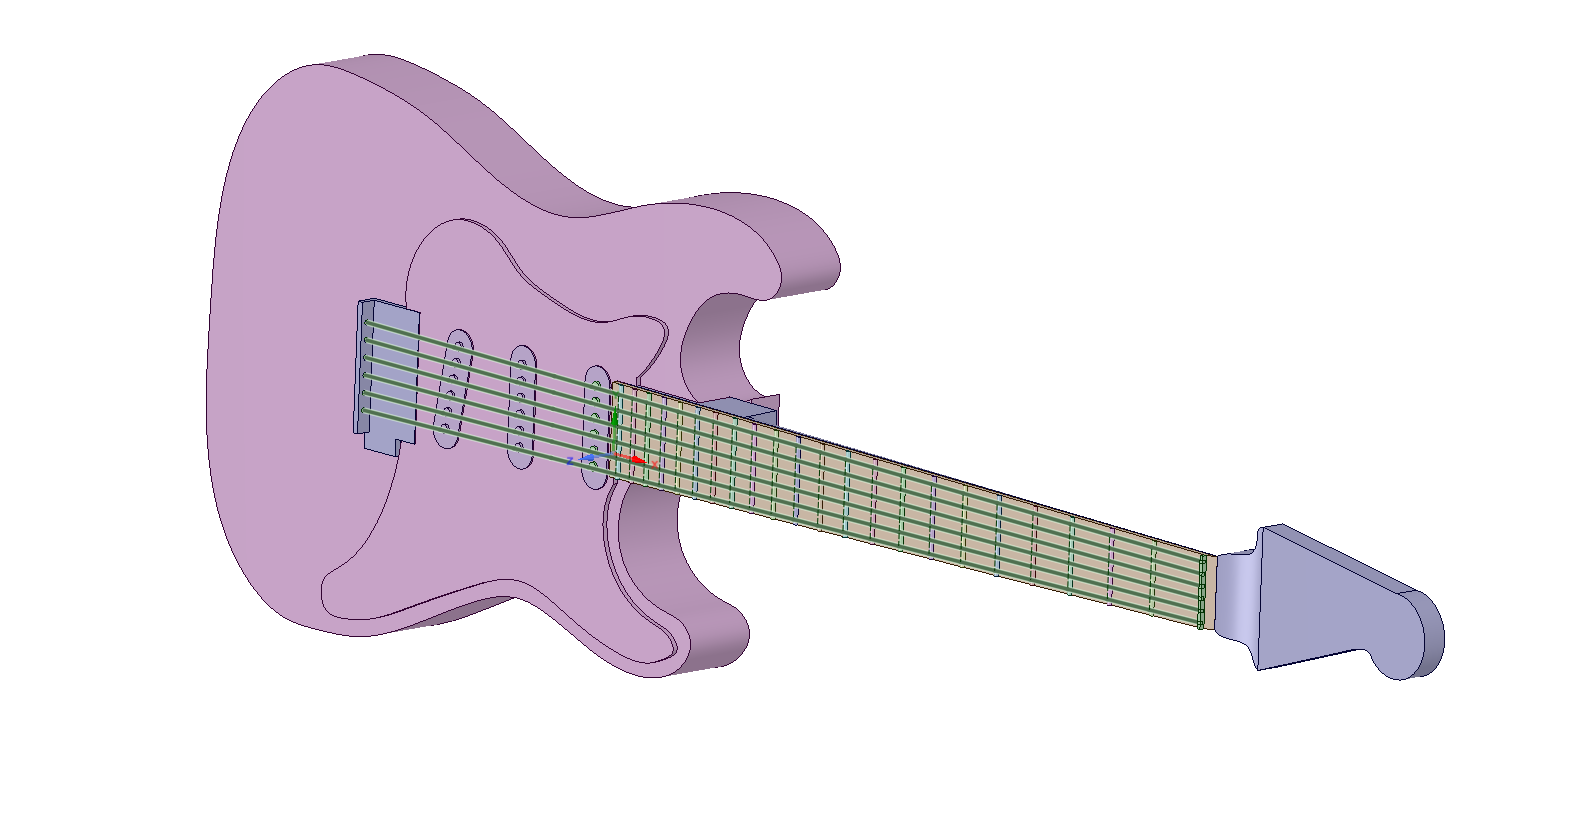 Simplified Guitar Model in ANSYS SpaceClaim